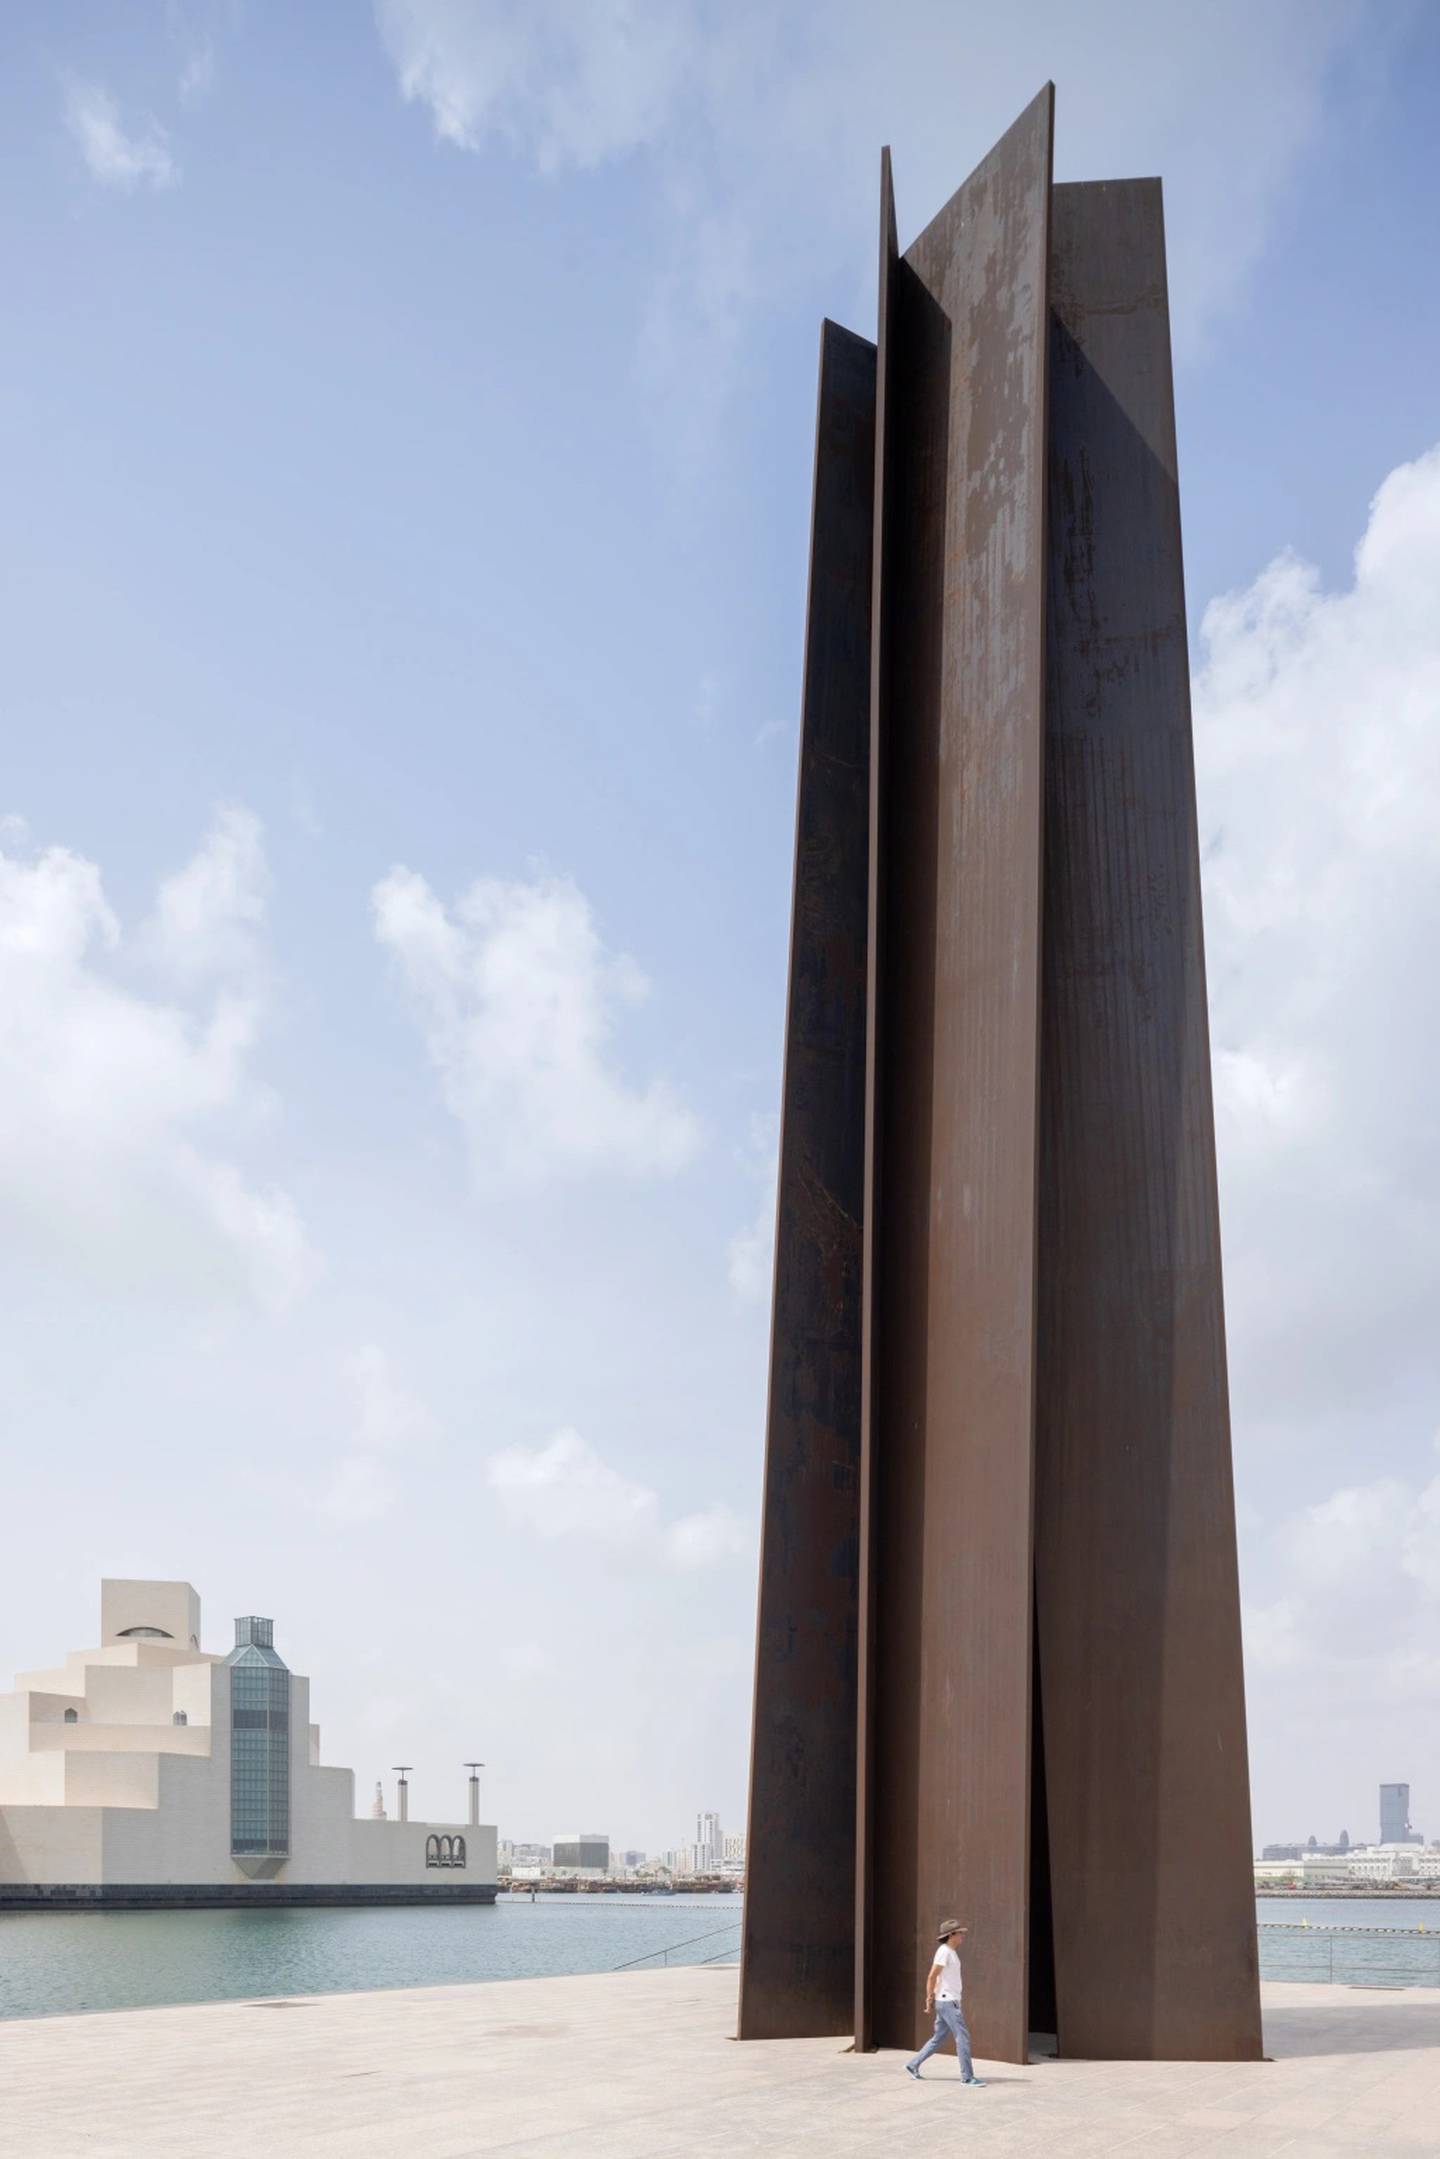 Richard Serra's '7' (2011). Photo: Qatar Museums